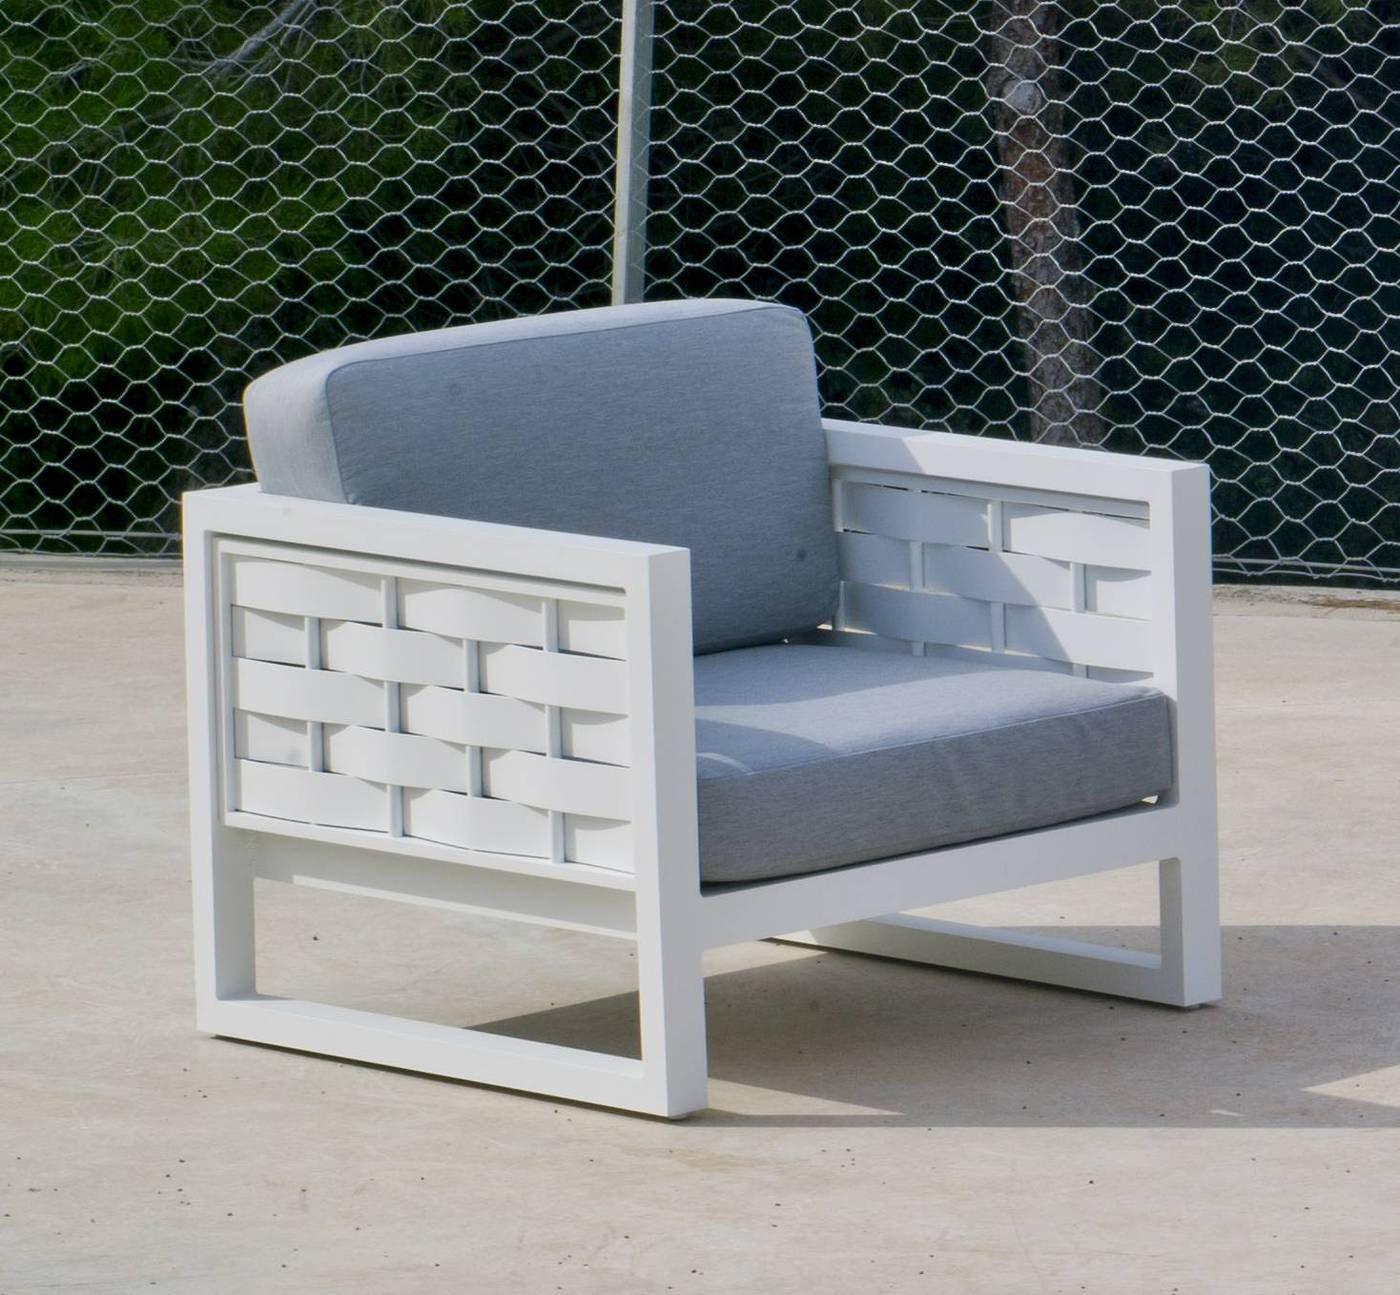 Set Aluminio Luxe Augusta-9 - Lujoso conjunto de aluminio luxe: 1 sofá de 2 plazas + 2 sillones + 2 reposapiés + 1 mesa de centro + cojines. Estructura de color blanco, antracita o champagne.